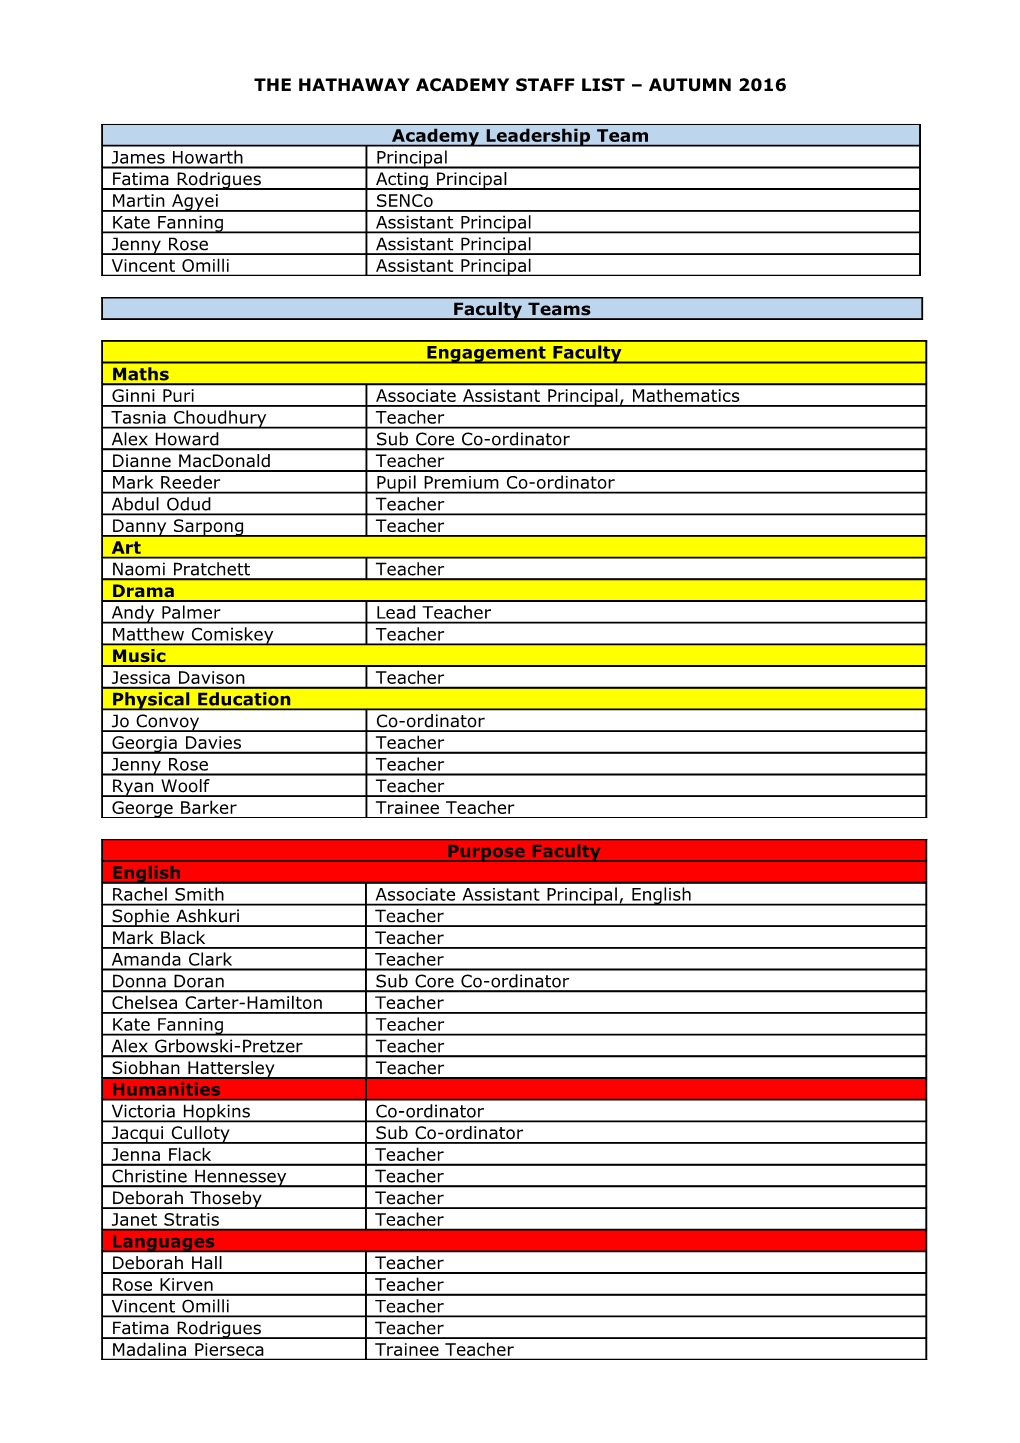 The Hathaway Academy Staff List Autumn 2016